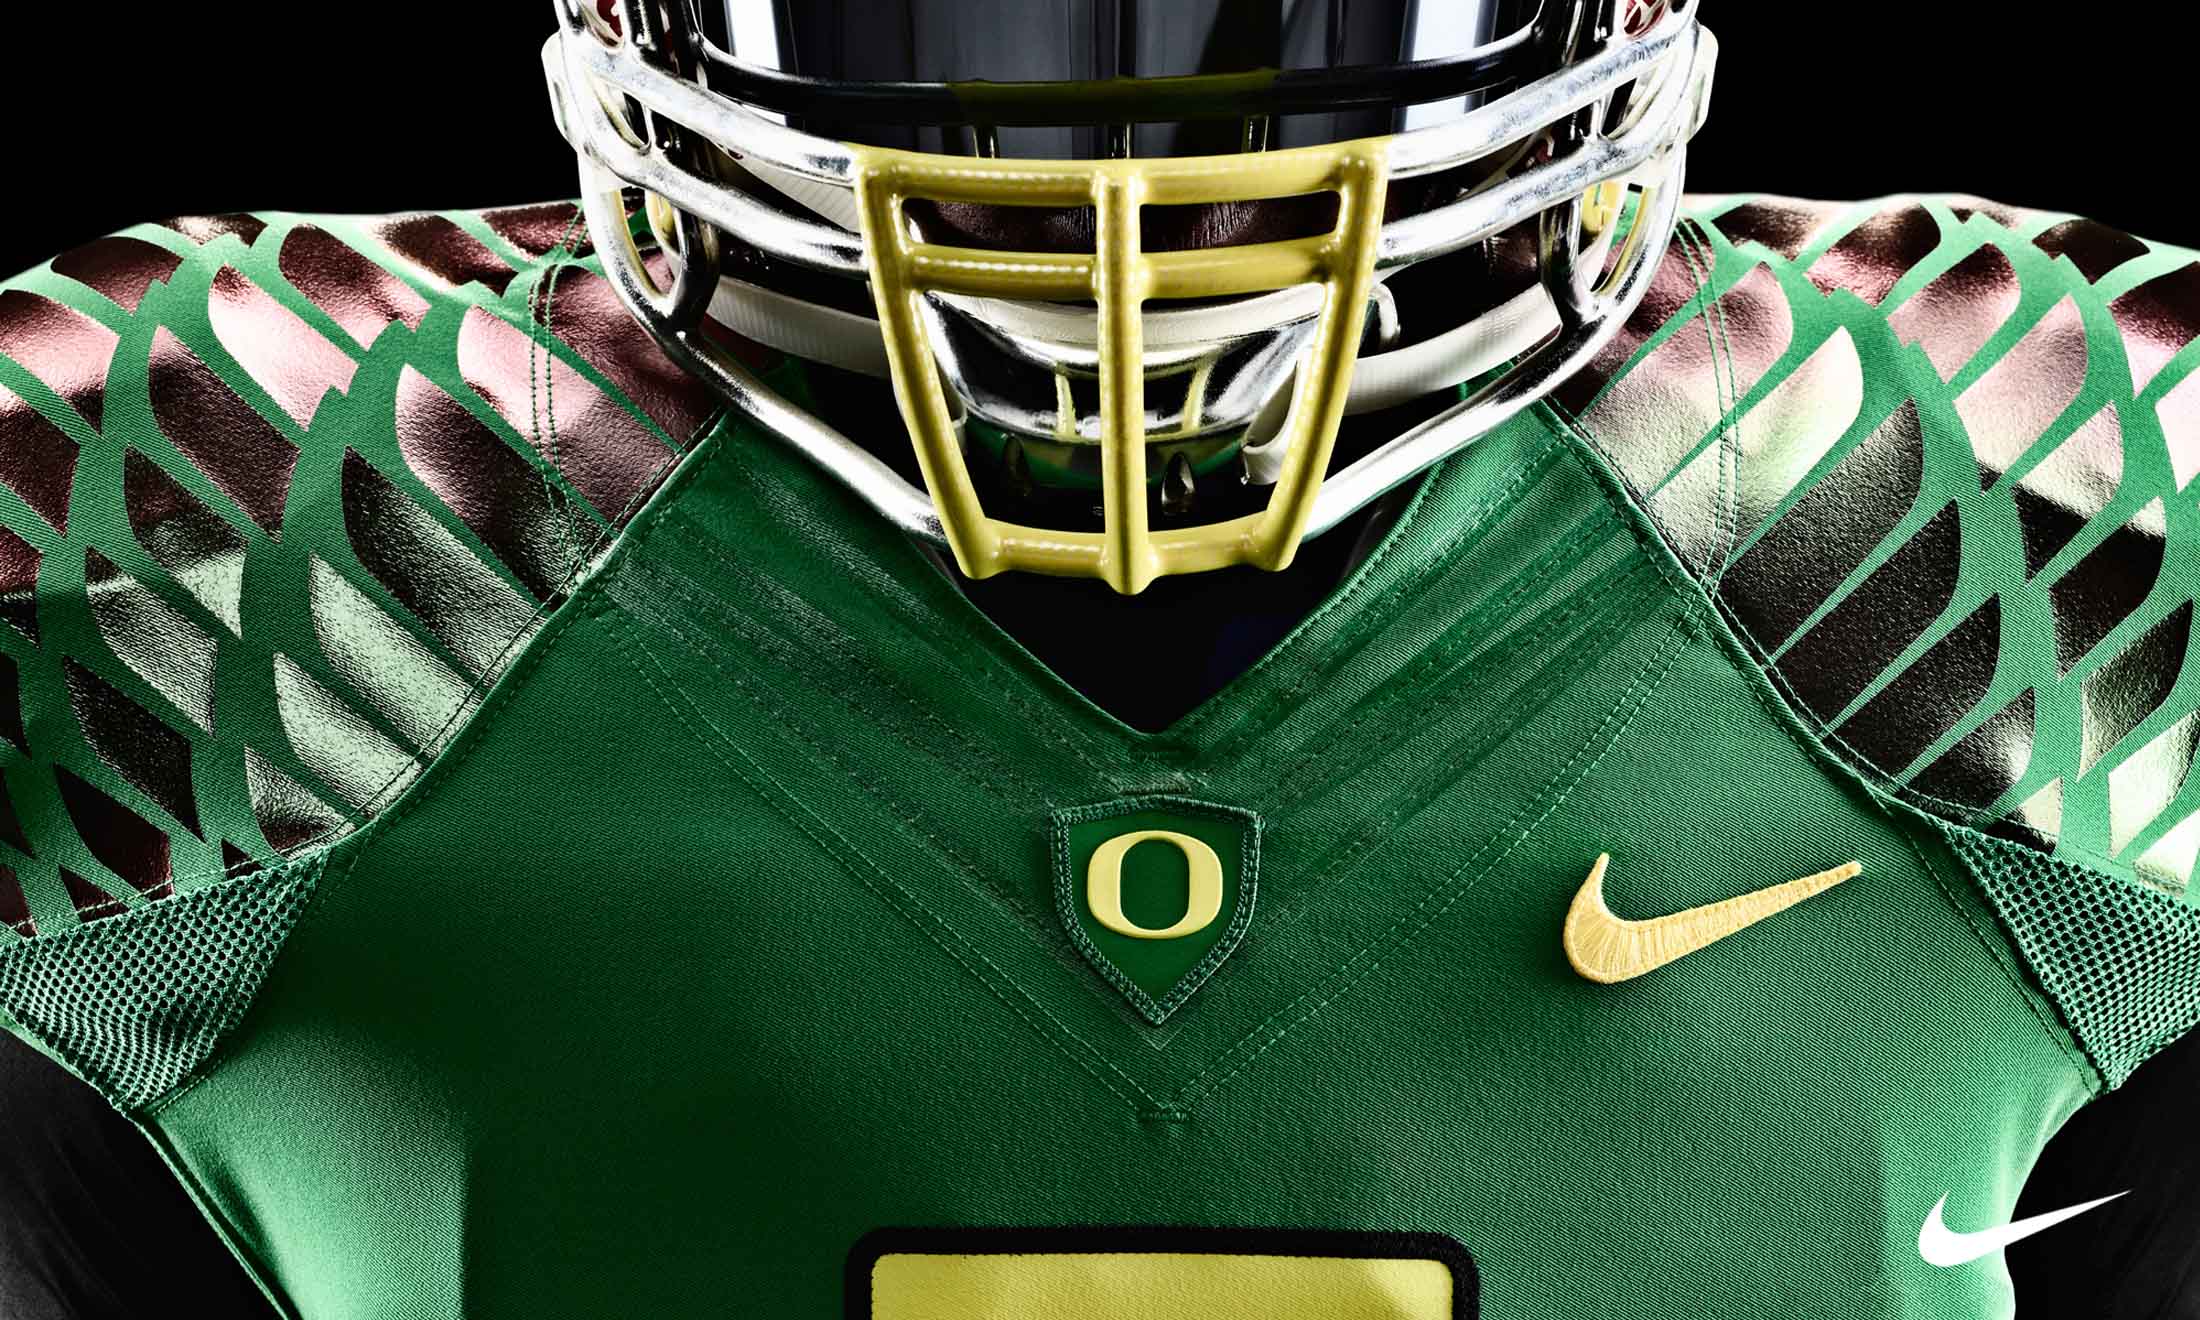 Oregon ducks football HD Wallpaper iPhones Backgrounds